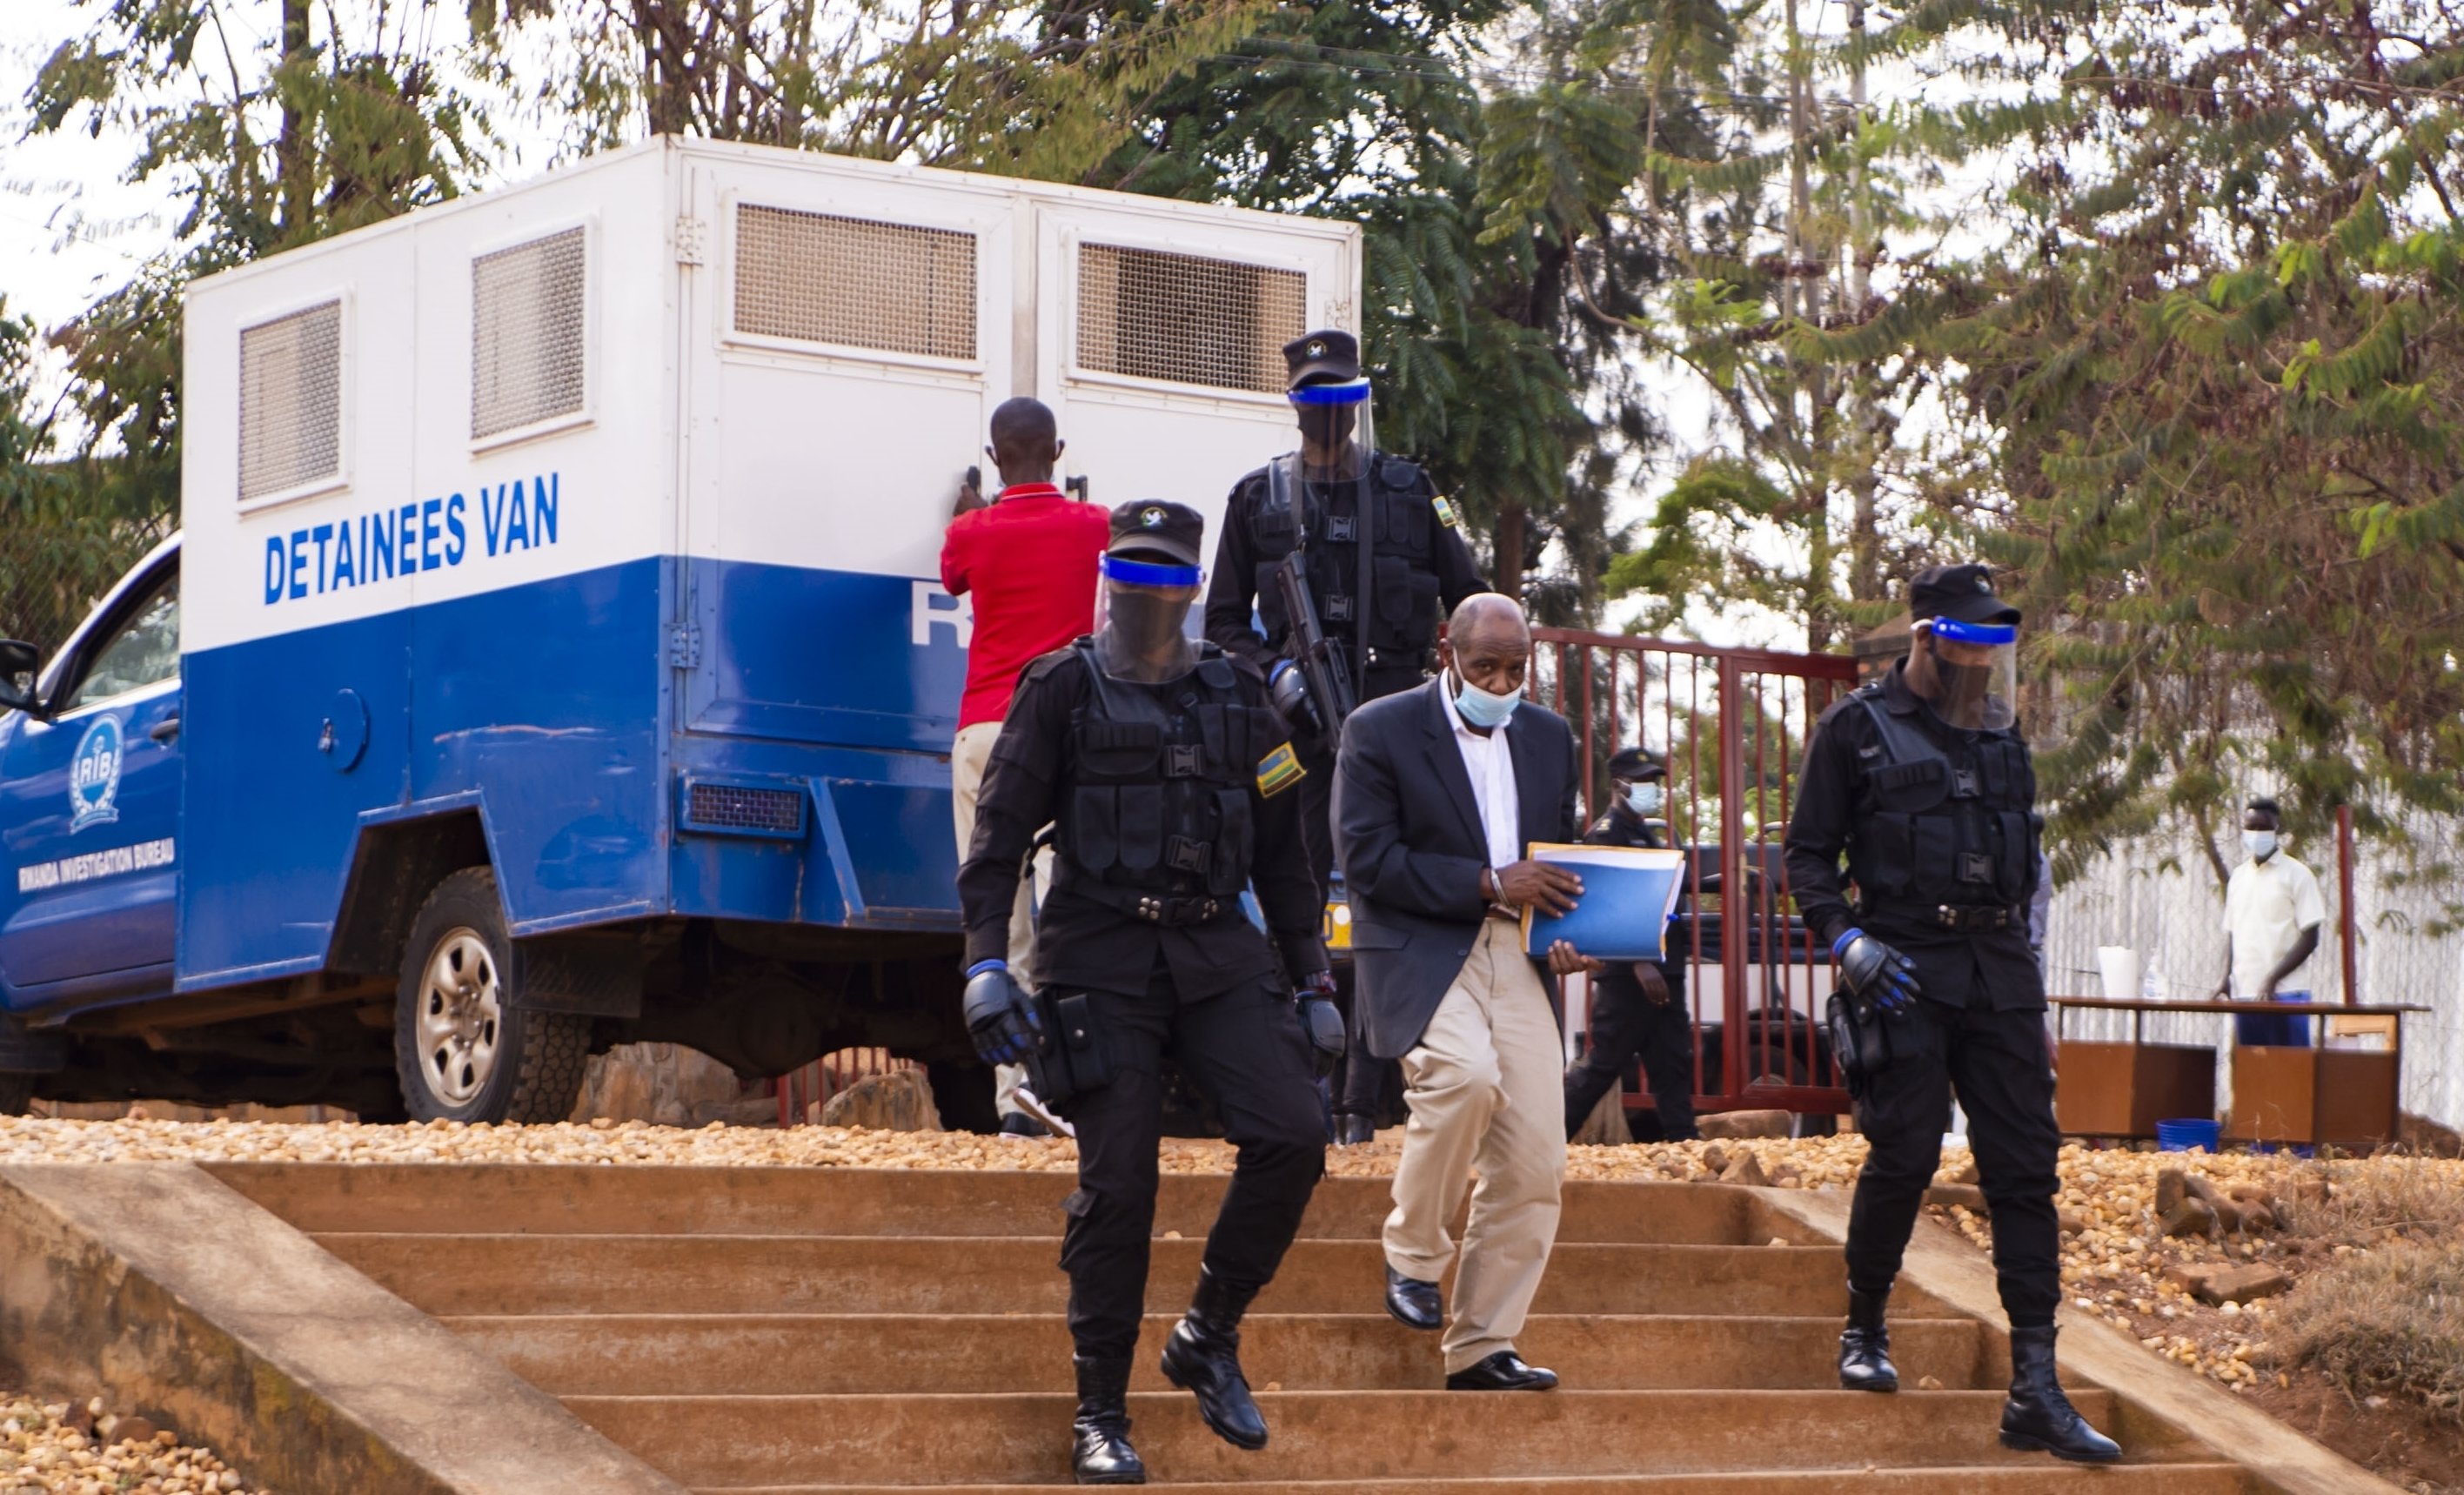 Не герой, а терорист е Пол Русесабагина, постанови съд в Руанда.